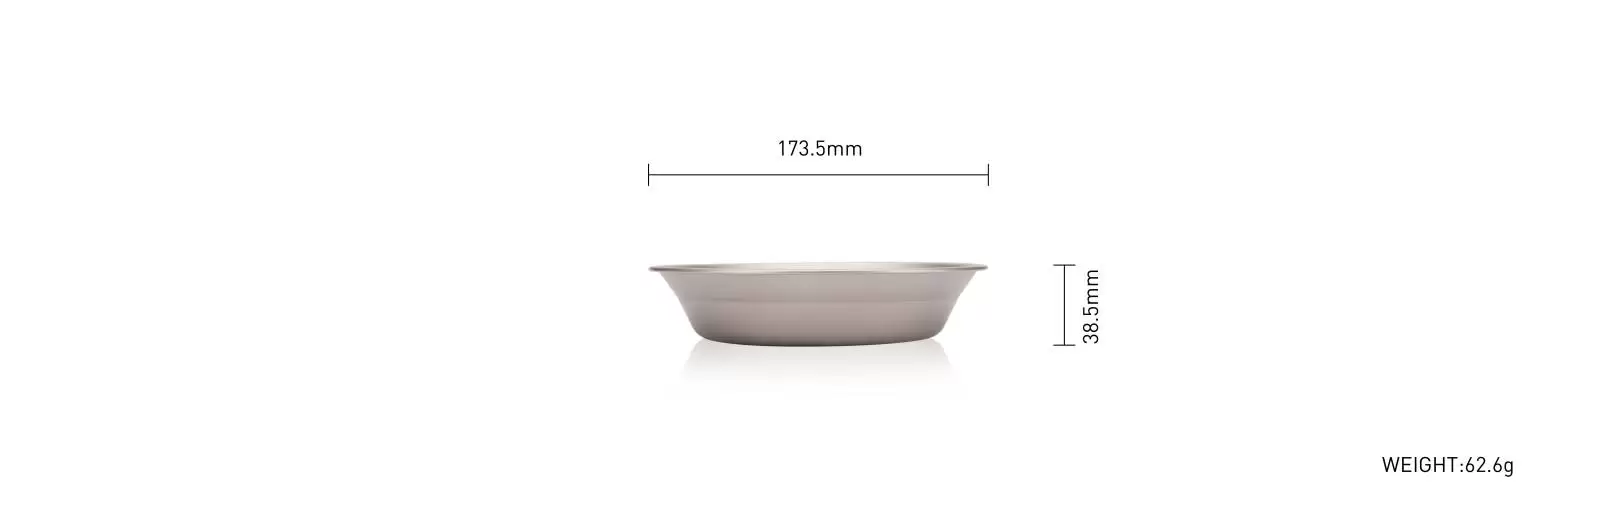 details of Deep Ultralight Titanium Sanded Tableware Surface Portable Dish